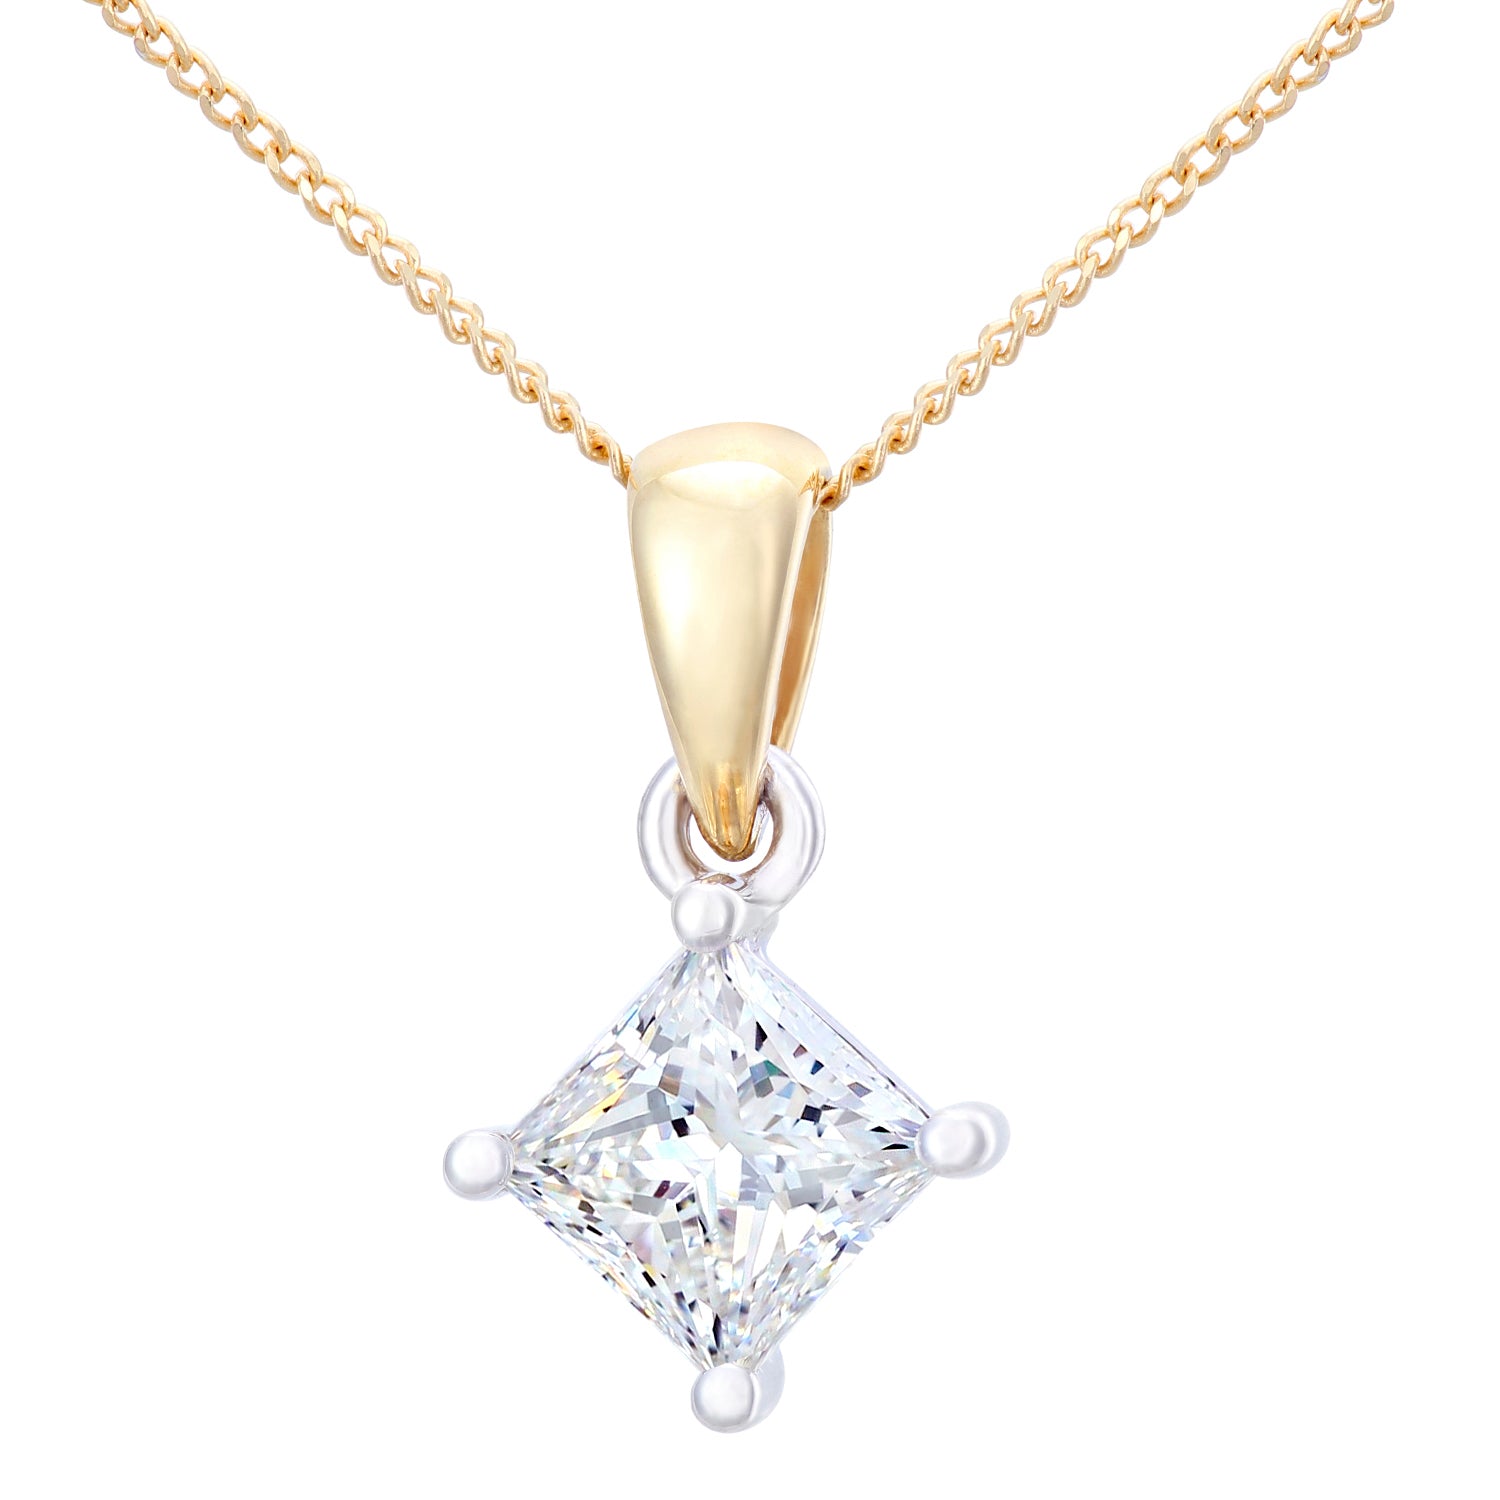 18ct Gold  Princess 1ct Diamond Solitaire Pendant Necklace 18 inch - PP0AXL4839Y18JPK